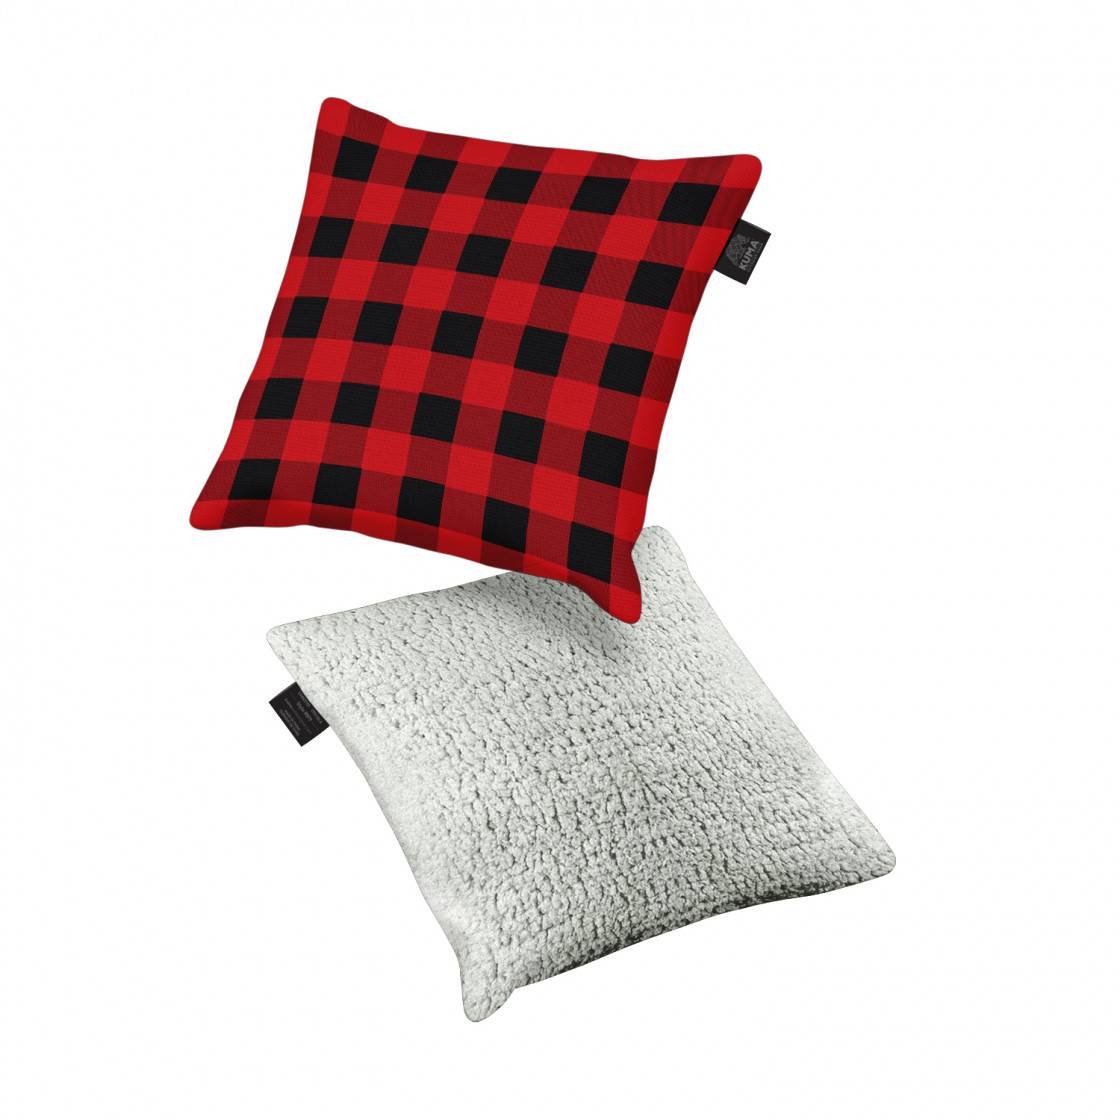 Kuma 858-KM-SDP-RB Square Decor Pillow - Red Plaid